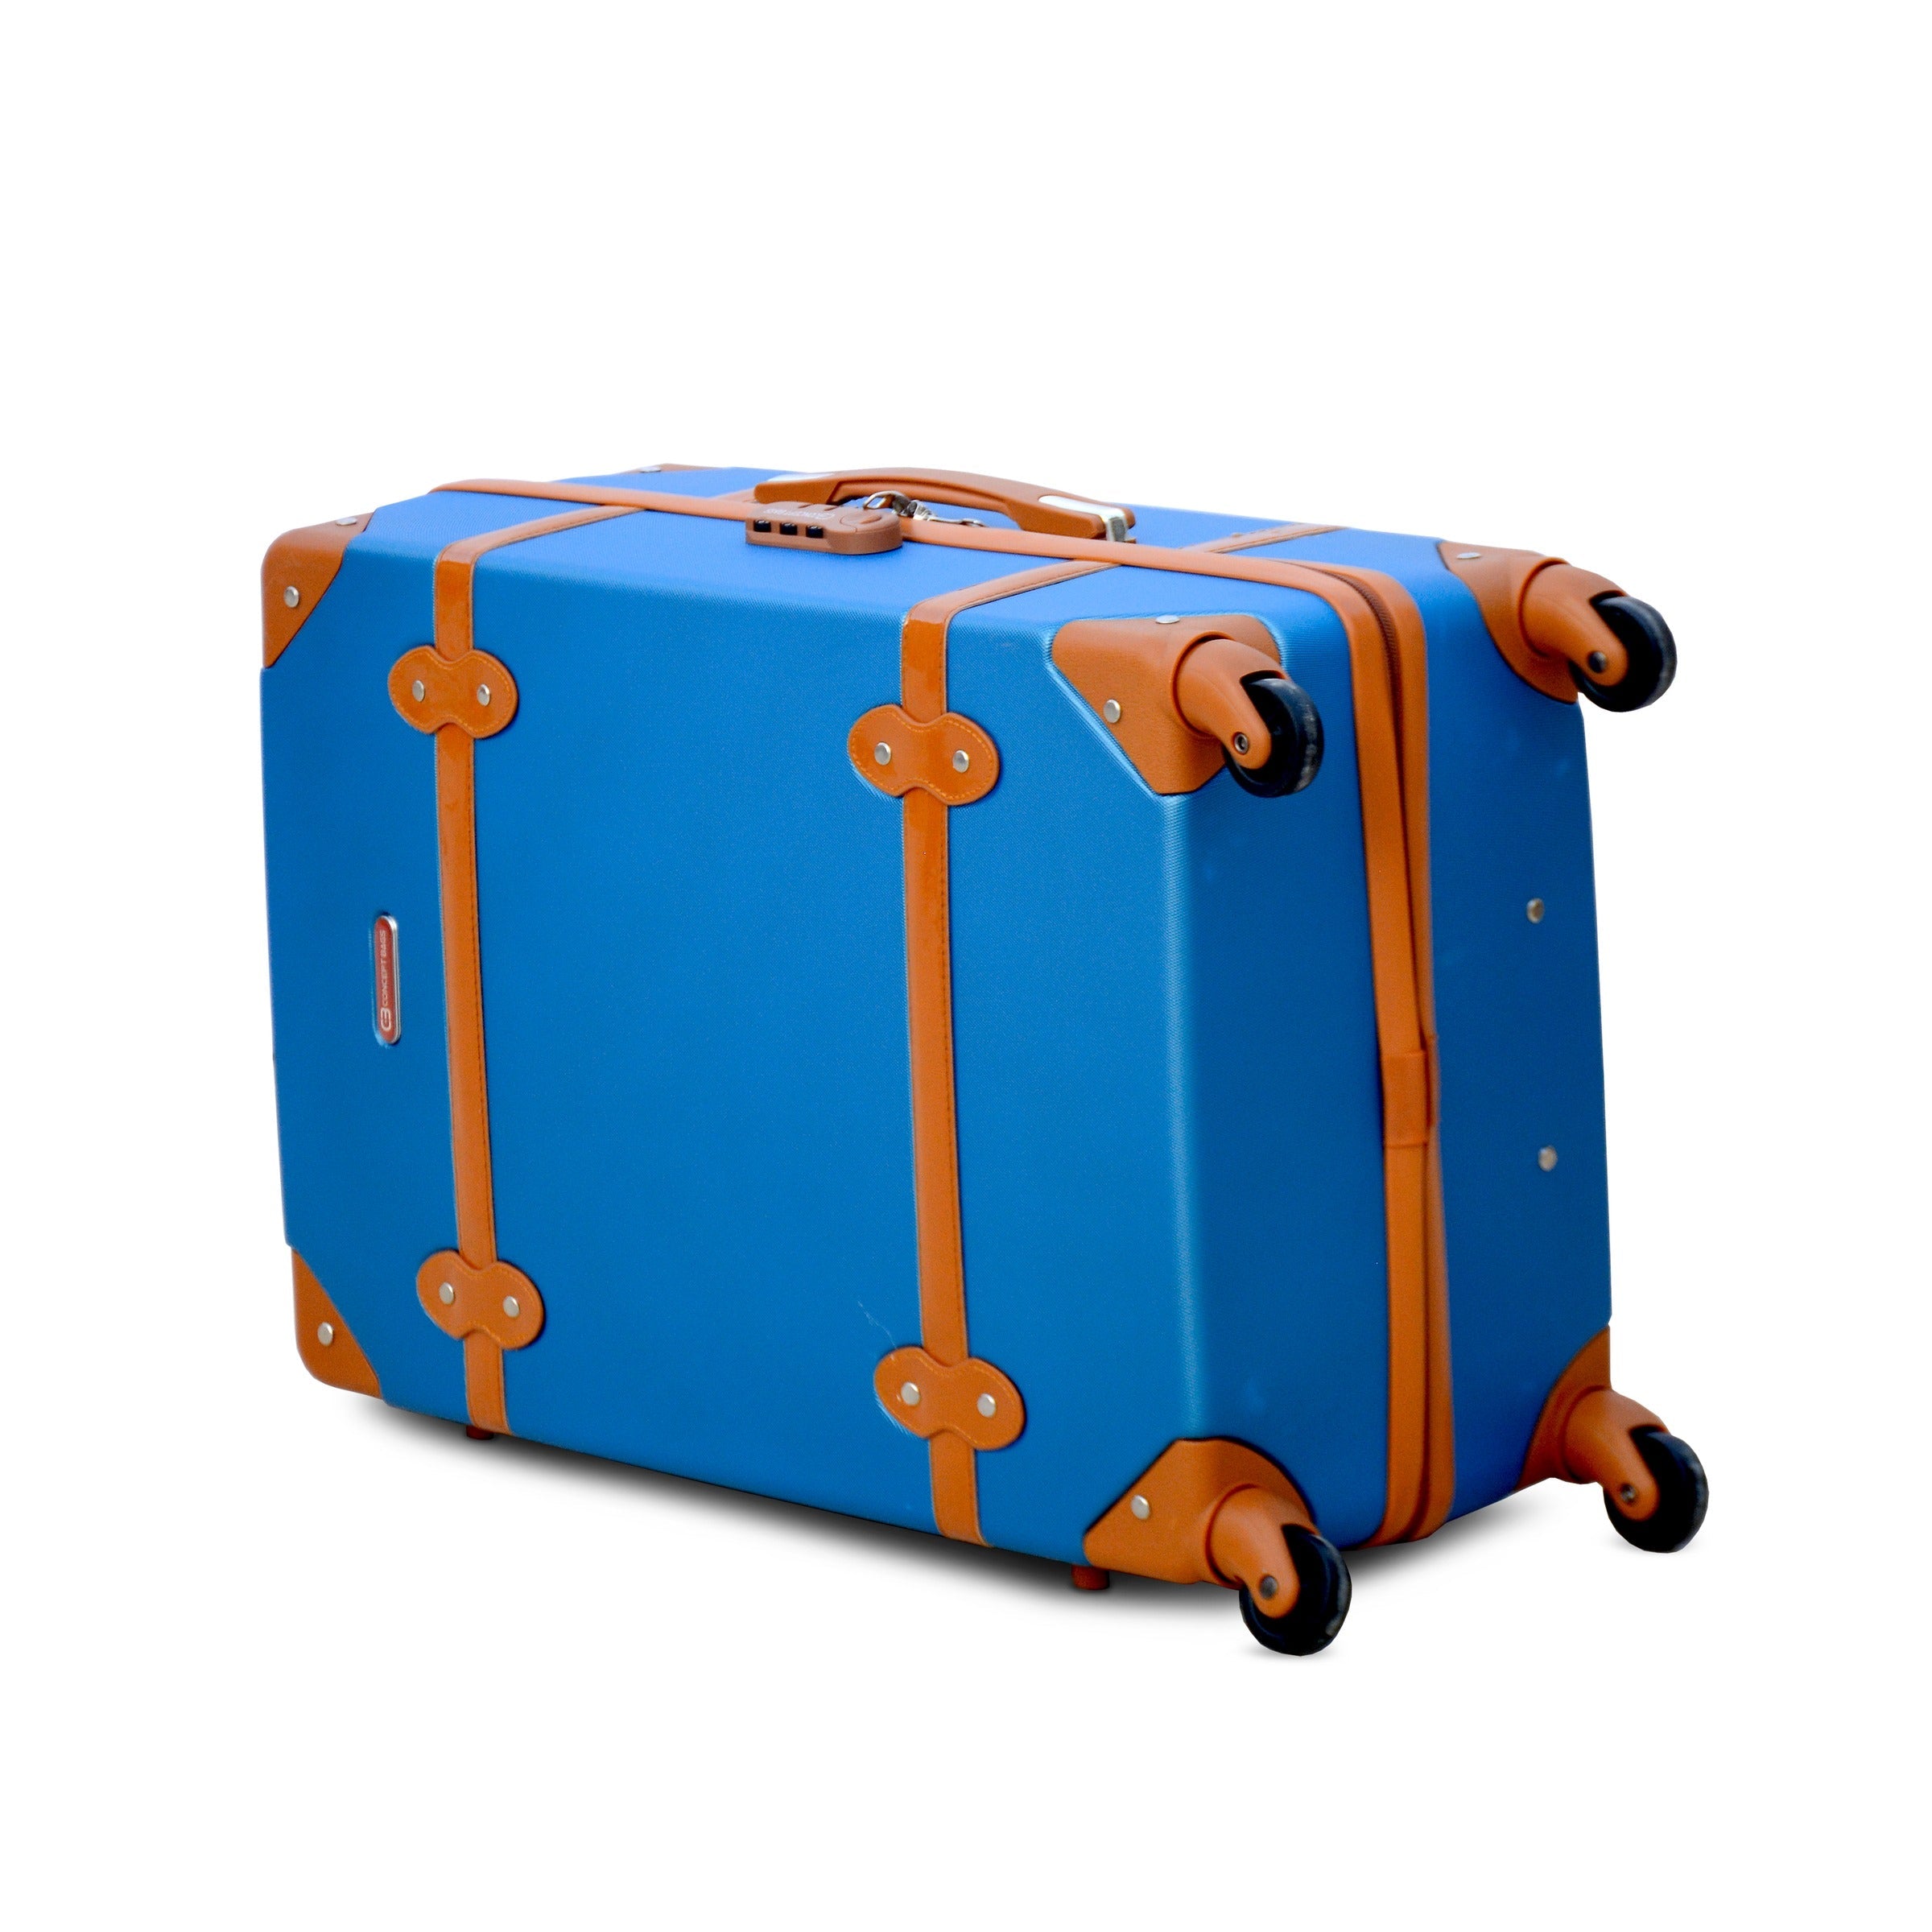 28" Blue Lightweight Corner Guard ABS Luggage Hard Case Trolley Bag